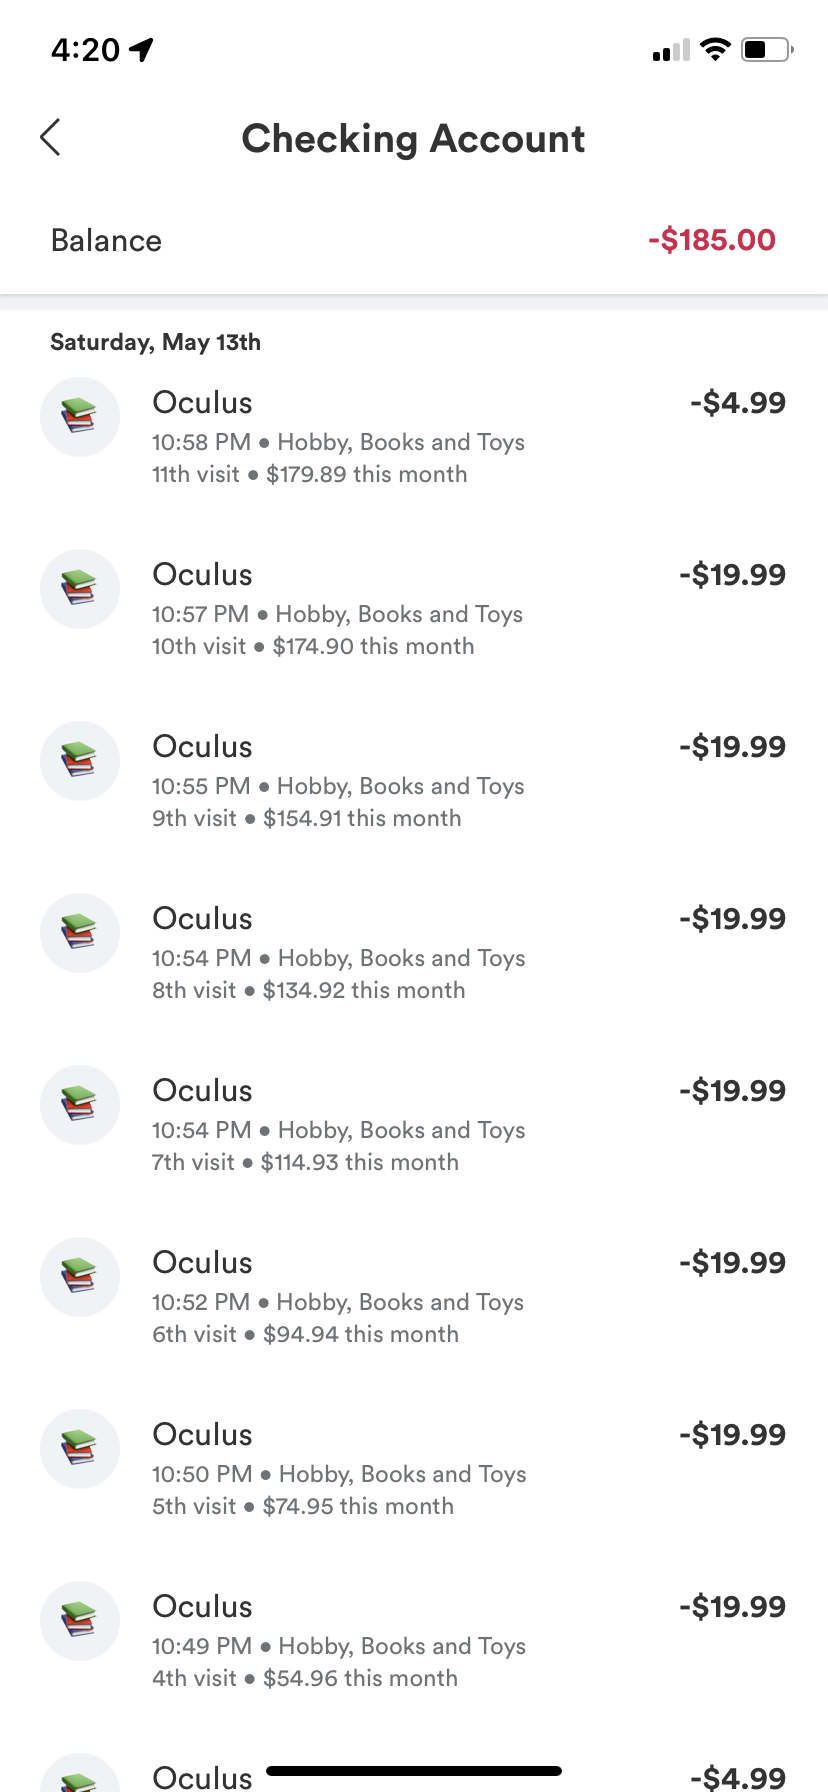 Oculus complaint Unauthorized purchase